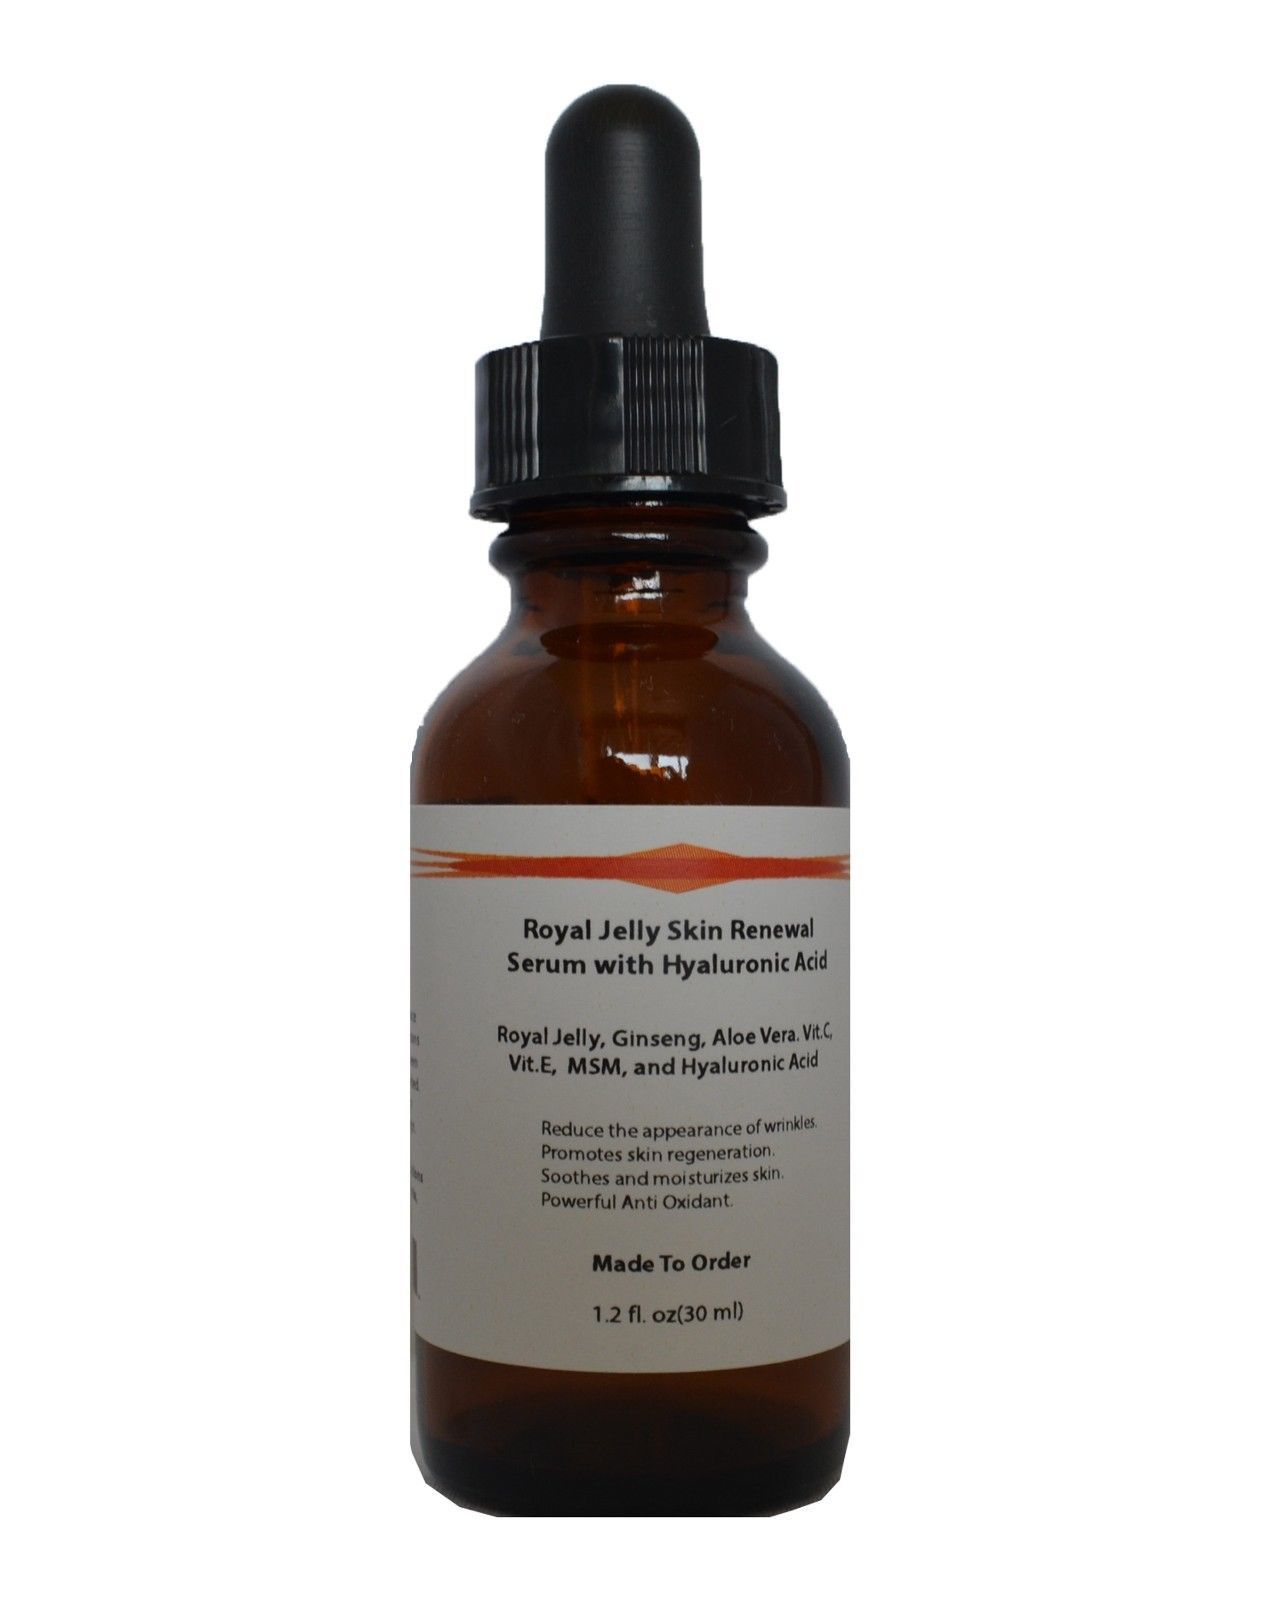 Royal Jelly Skin Renewal Serum with Ginseng, Aloe Vera, MSM, Hyaluronic Acid - $16.34 - $27.23